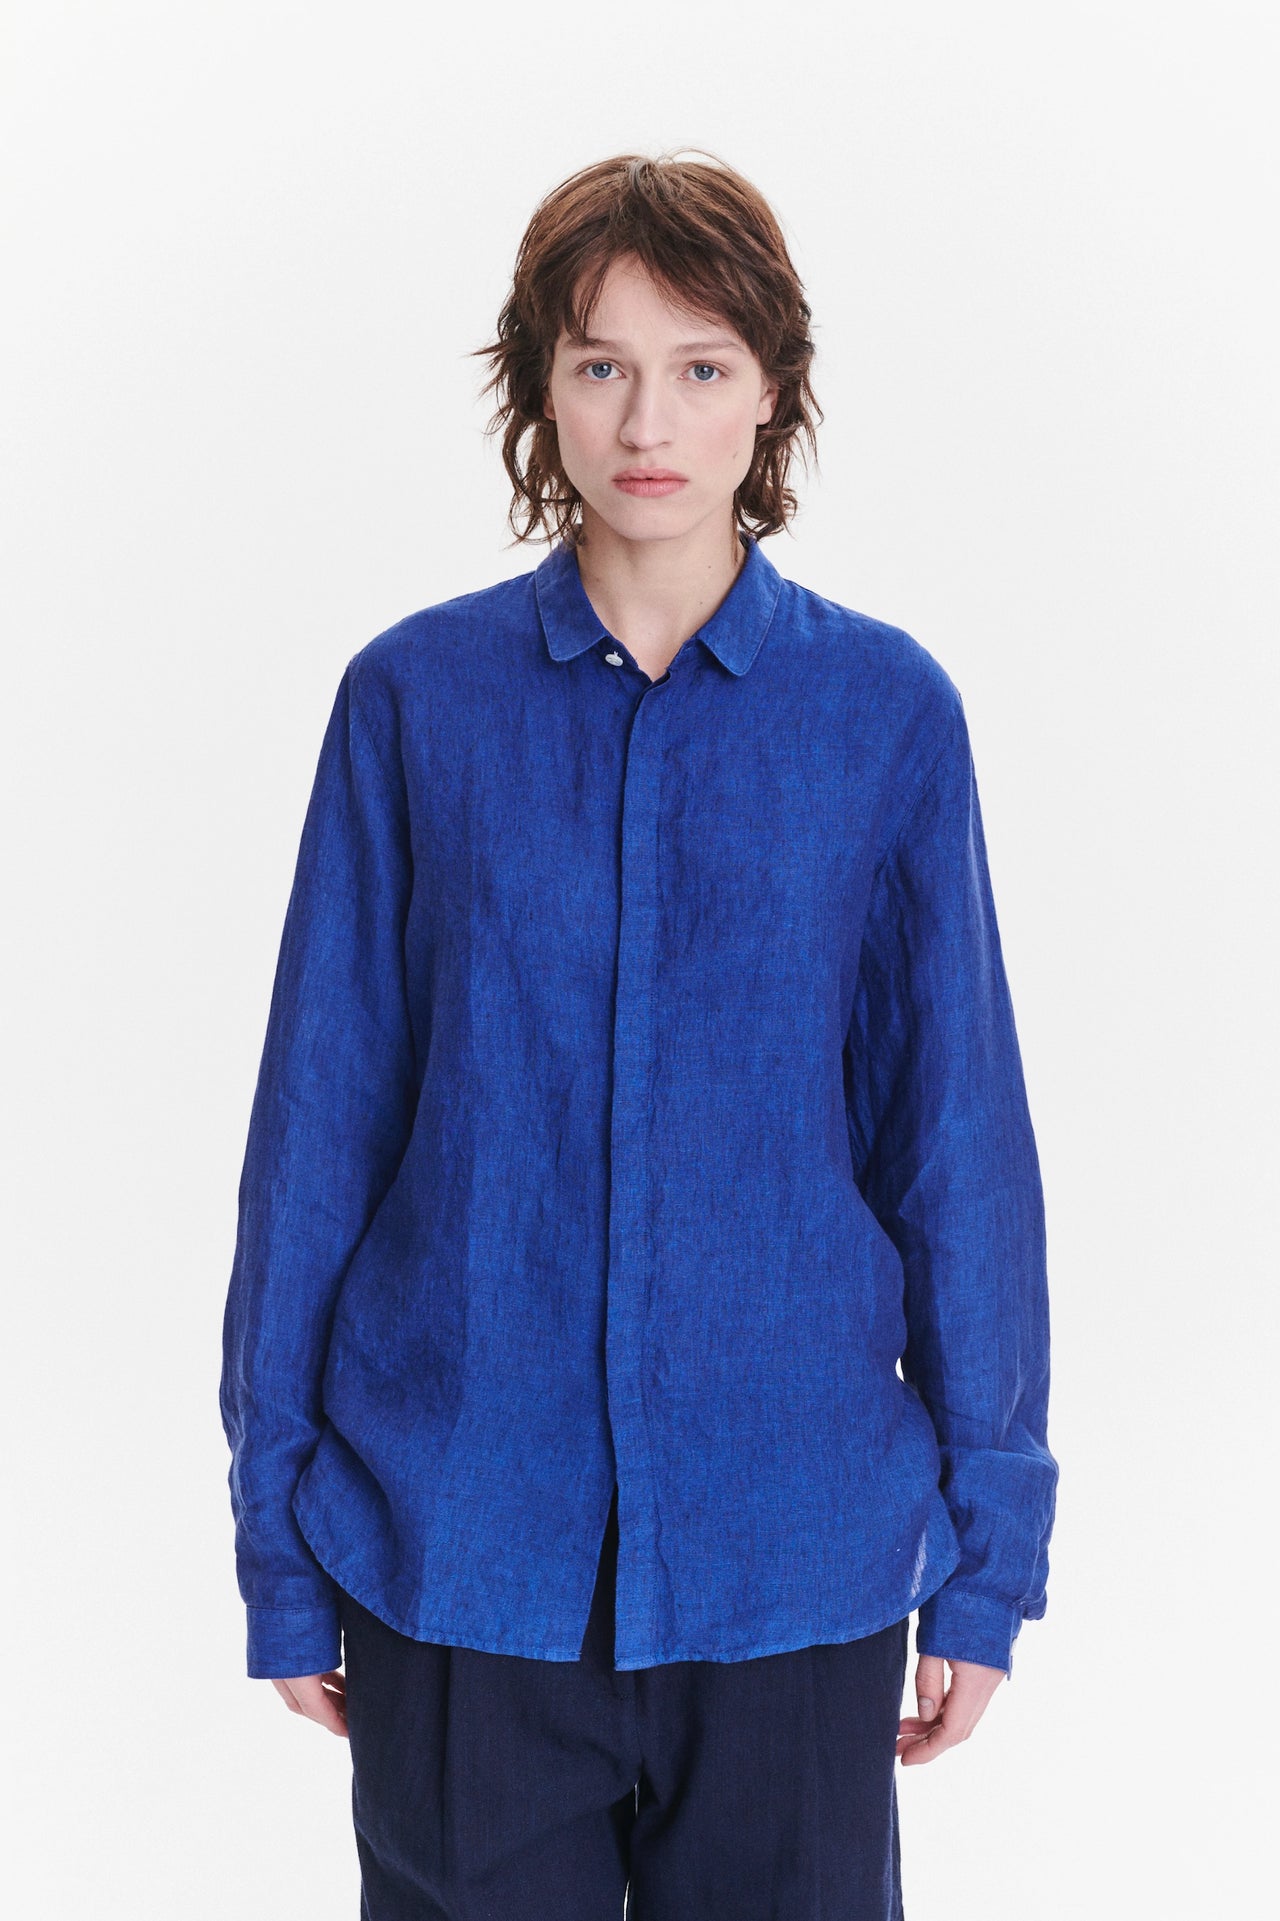 Cute Round Collar Shirt in a Soft and Airy Cobalt Blue Bohemian Linen